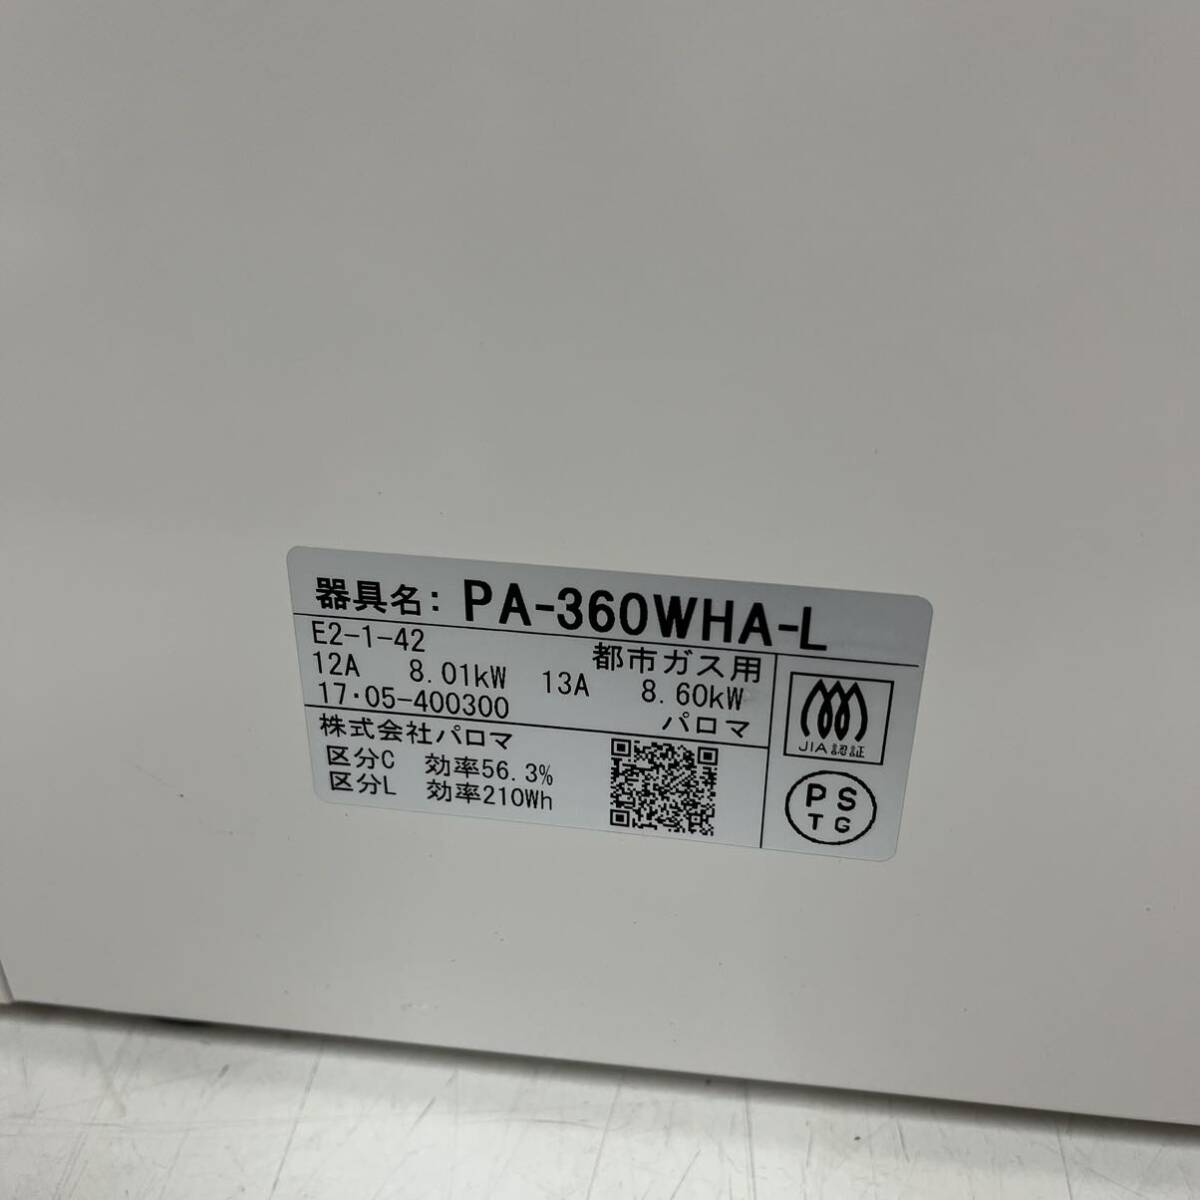 P◯ Paloma PA-360WHA-L パロマ ガステーブル ガスコンロ 都市ガスの画像9